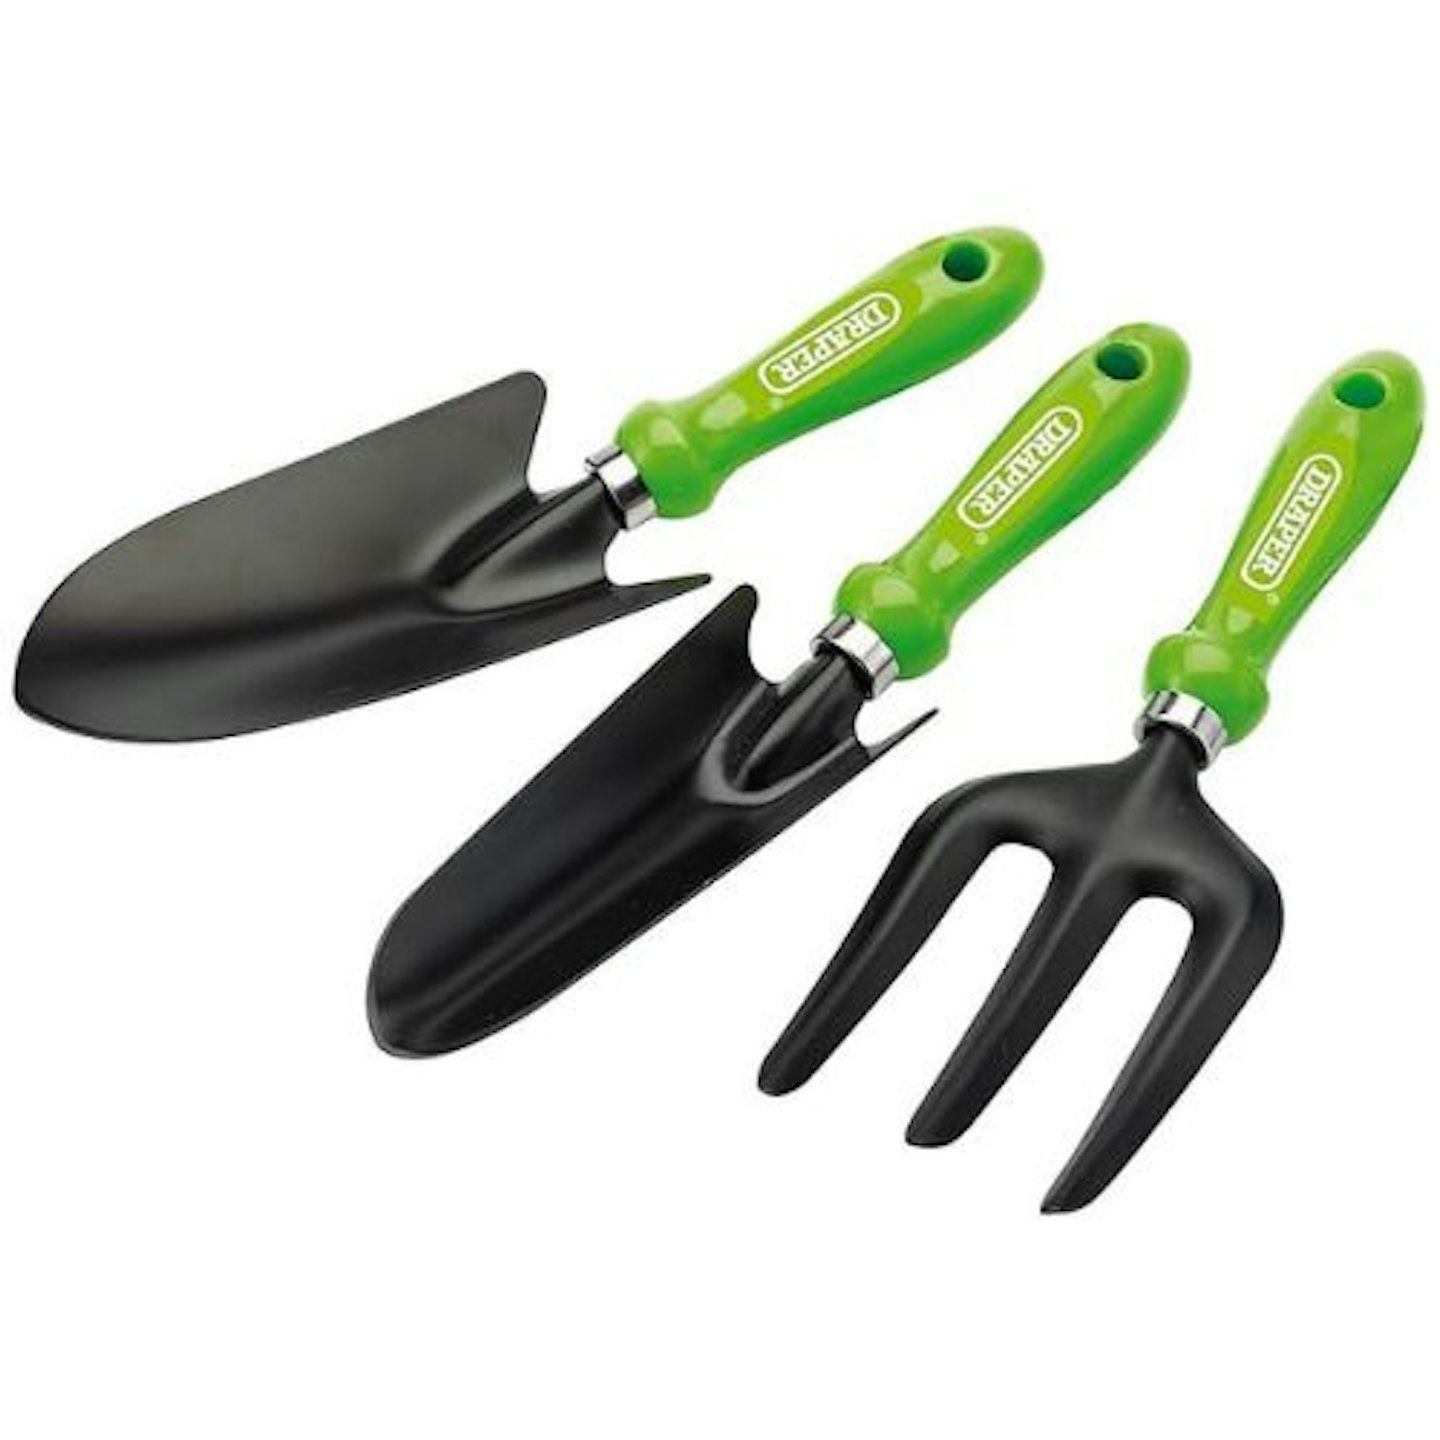 Draper 83972 Easy Find Gardening Hand Tool Set